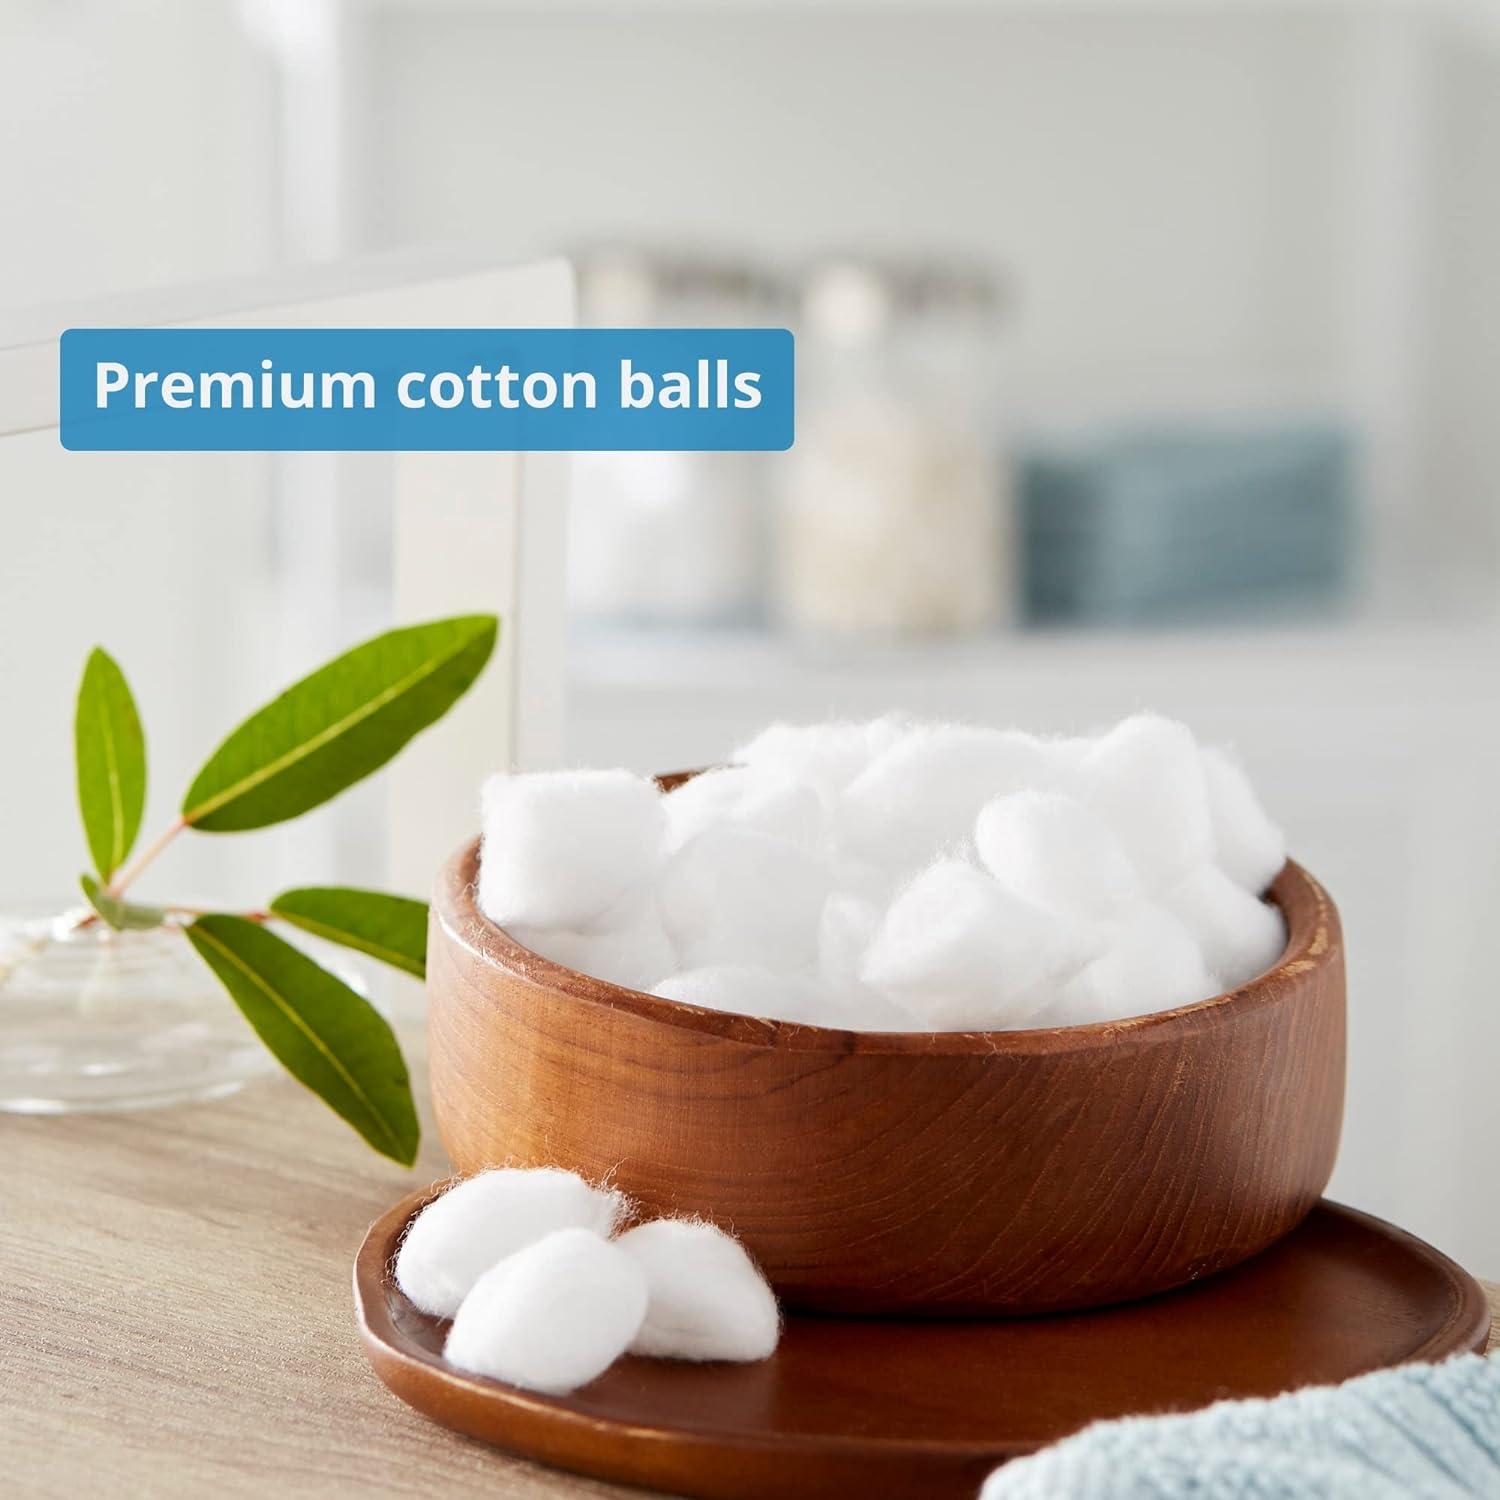 McKesson Cotton Balls, Non-Sterile, Maximum Absorbency, Medium